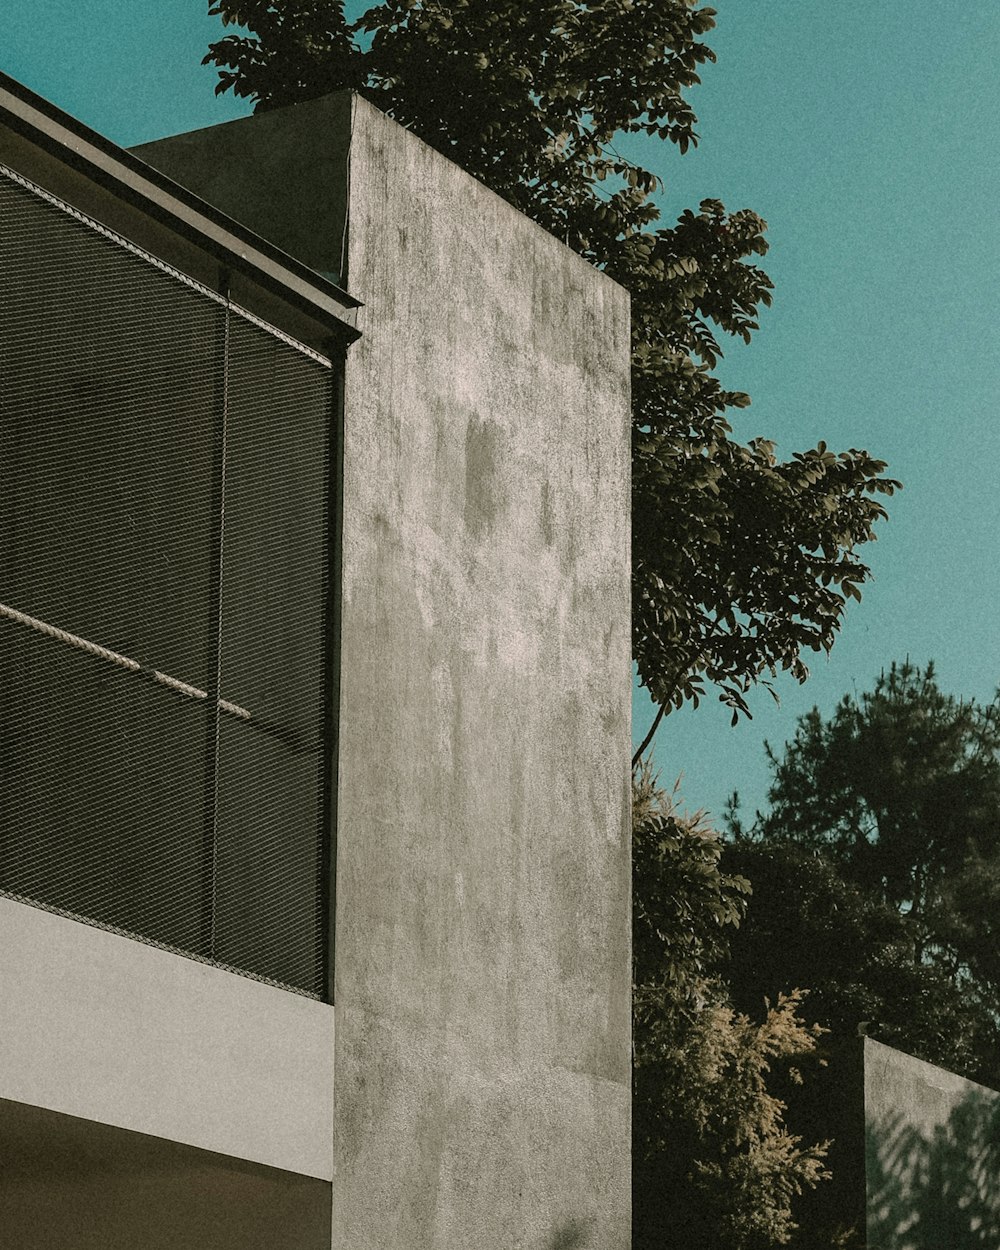 photo of concrete building